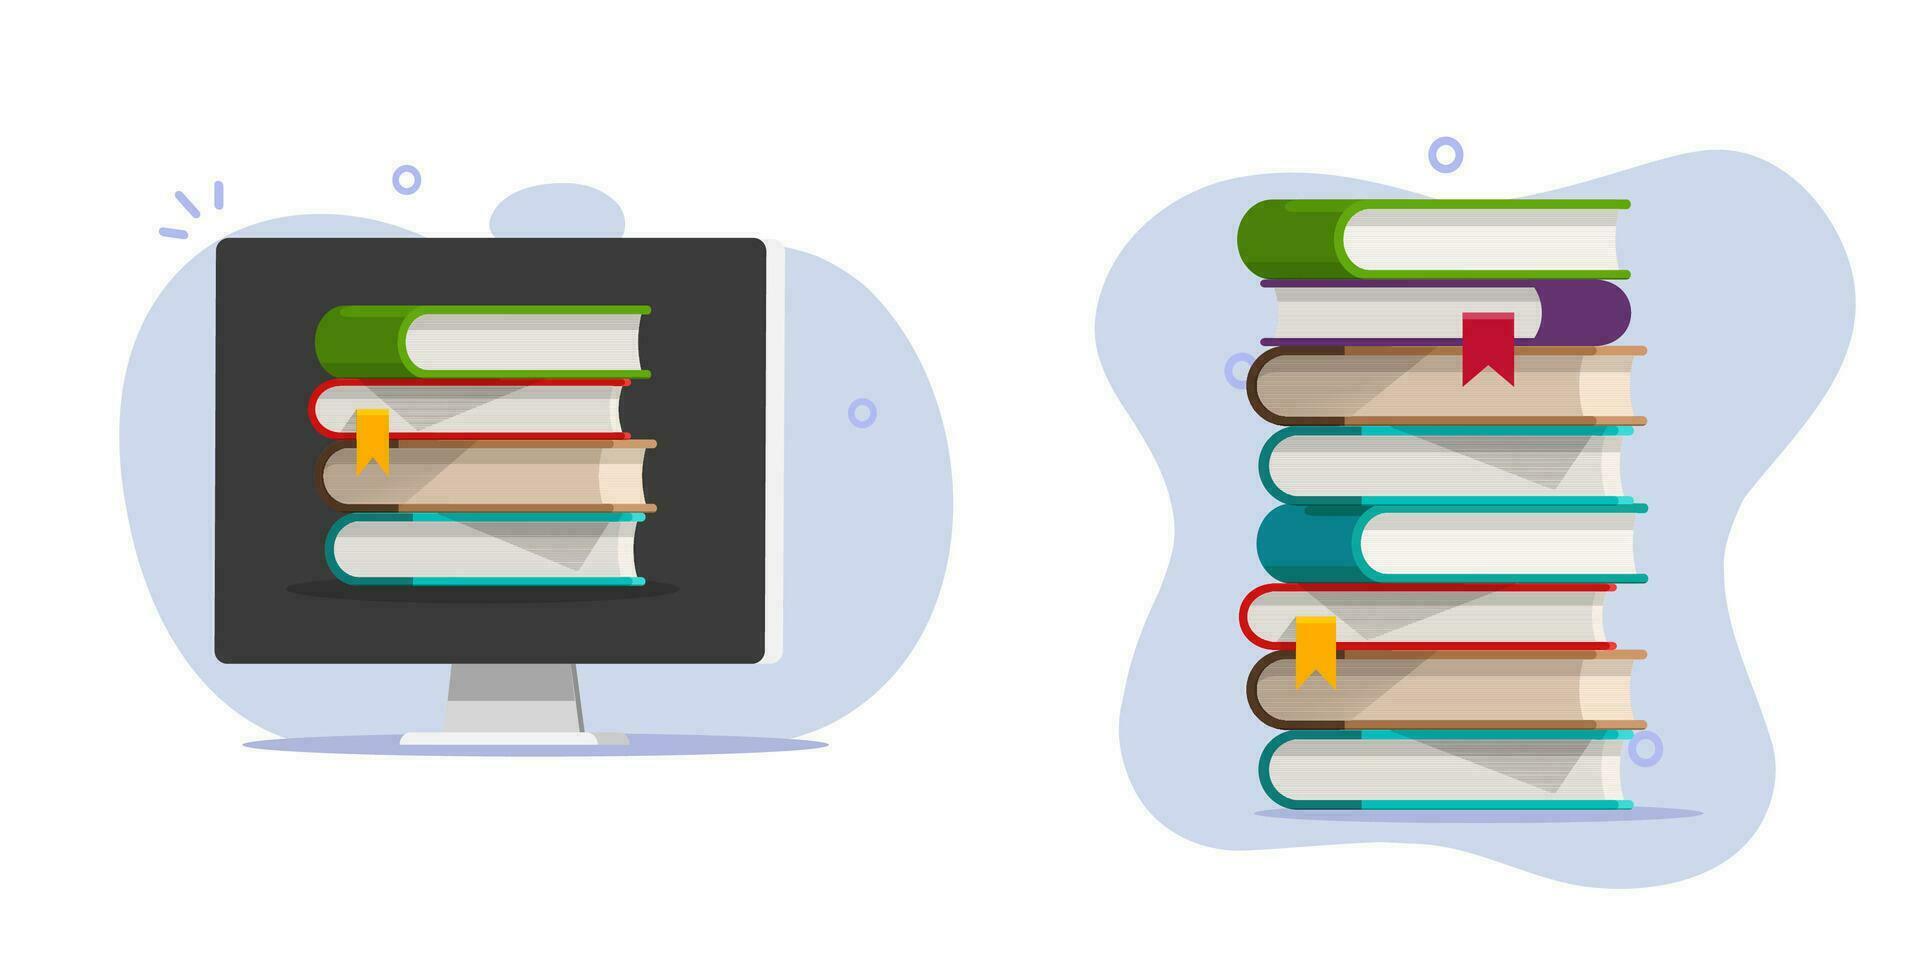 virtual biblioteca libro electronico libro apilar en línea digital icono vector gráfico ilustración, electrónico 3d papel Internet enciclopedia como colegio educación estudiar concepto en pantalla imagen clipart